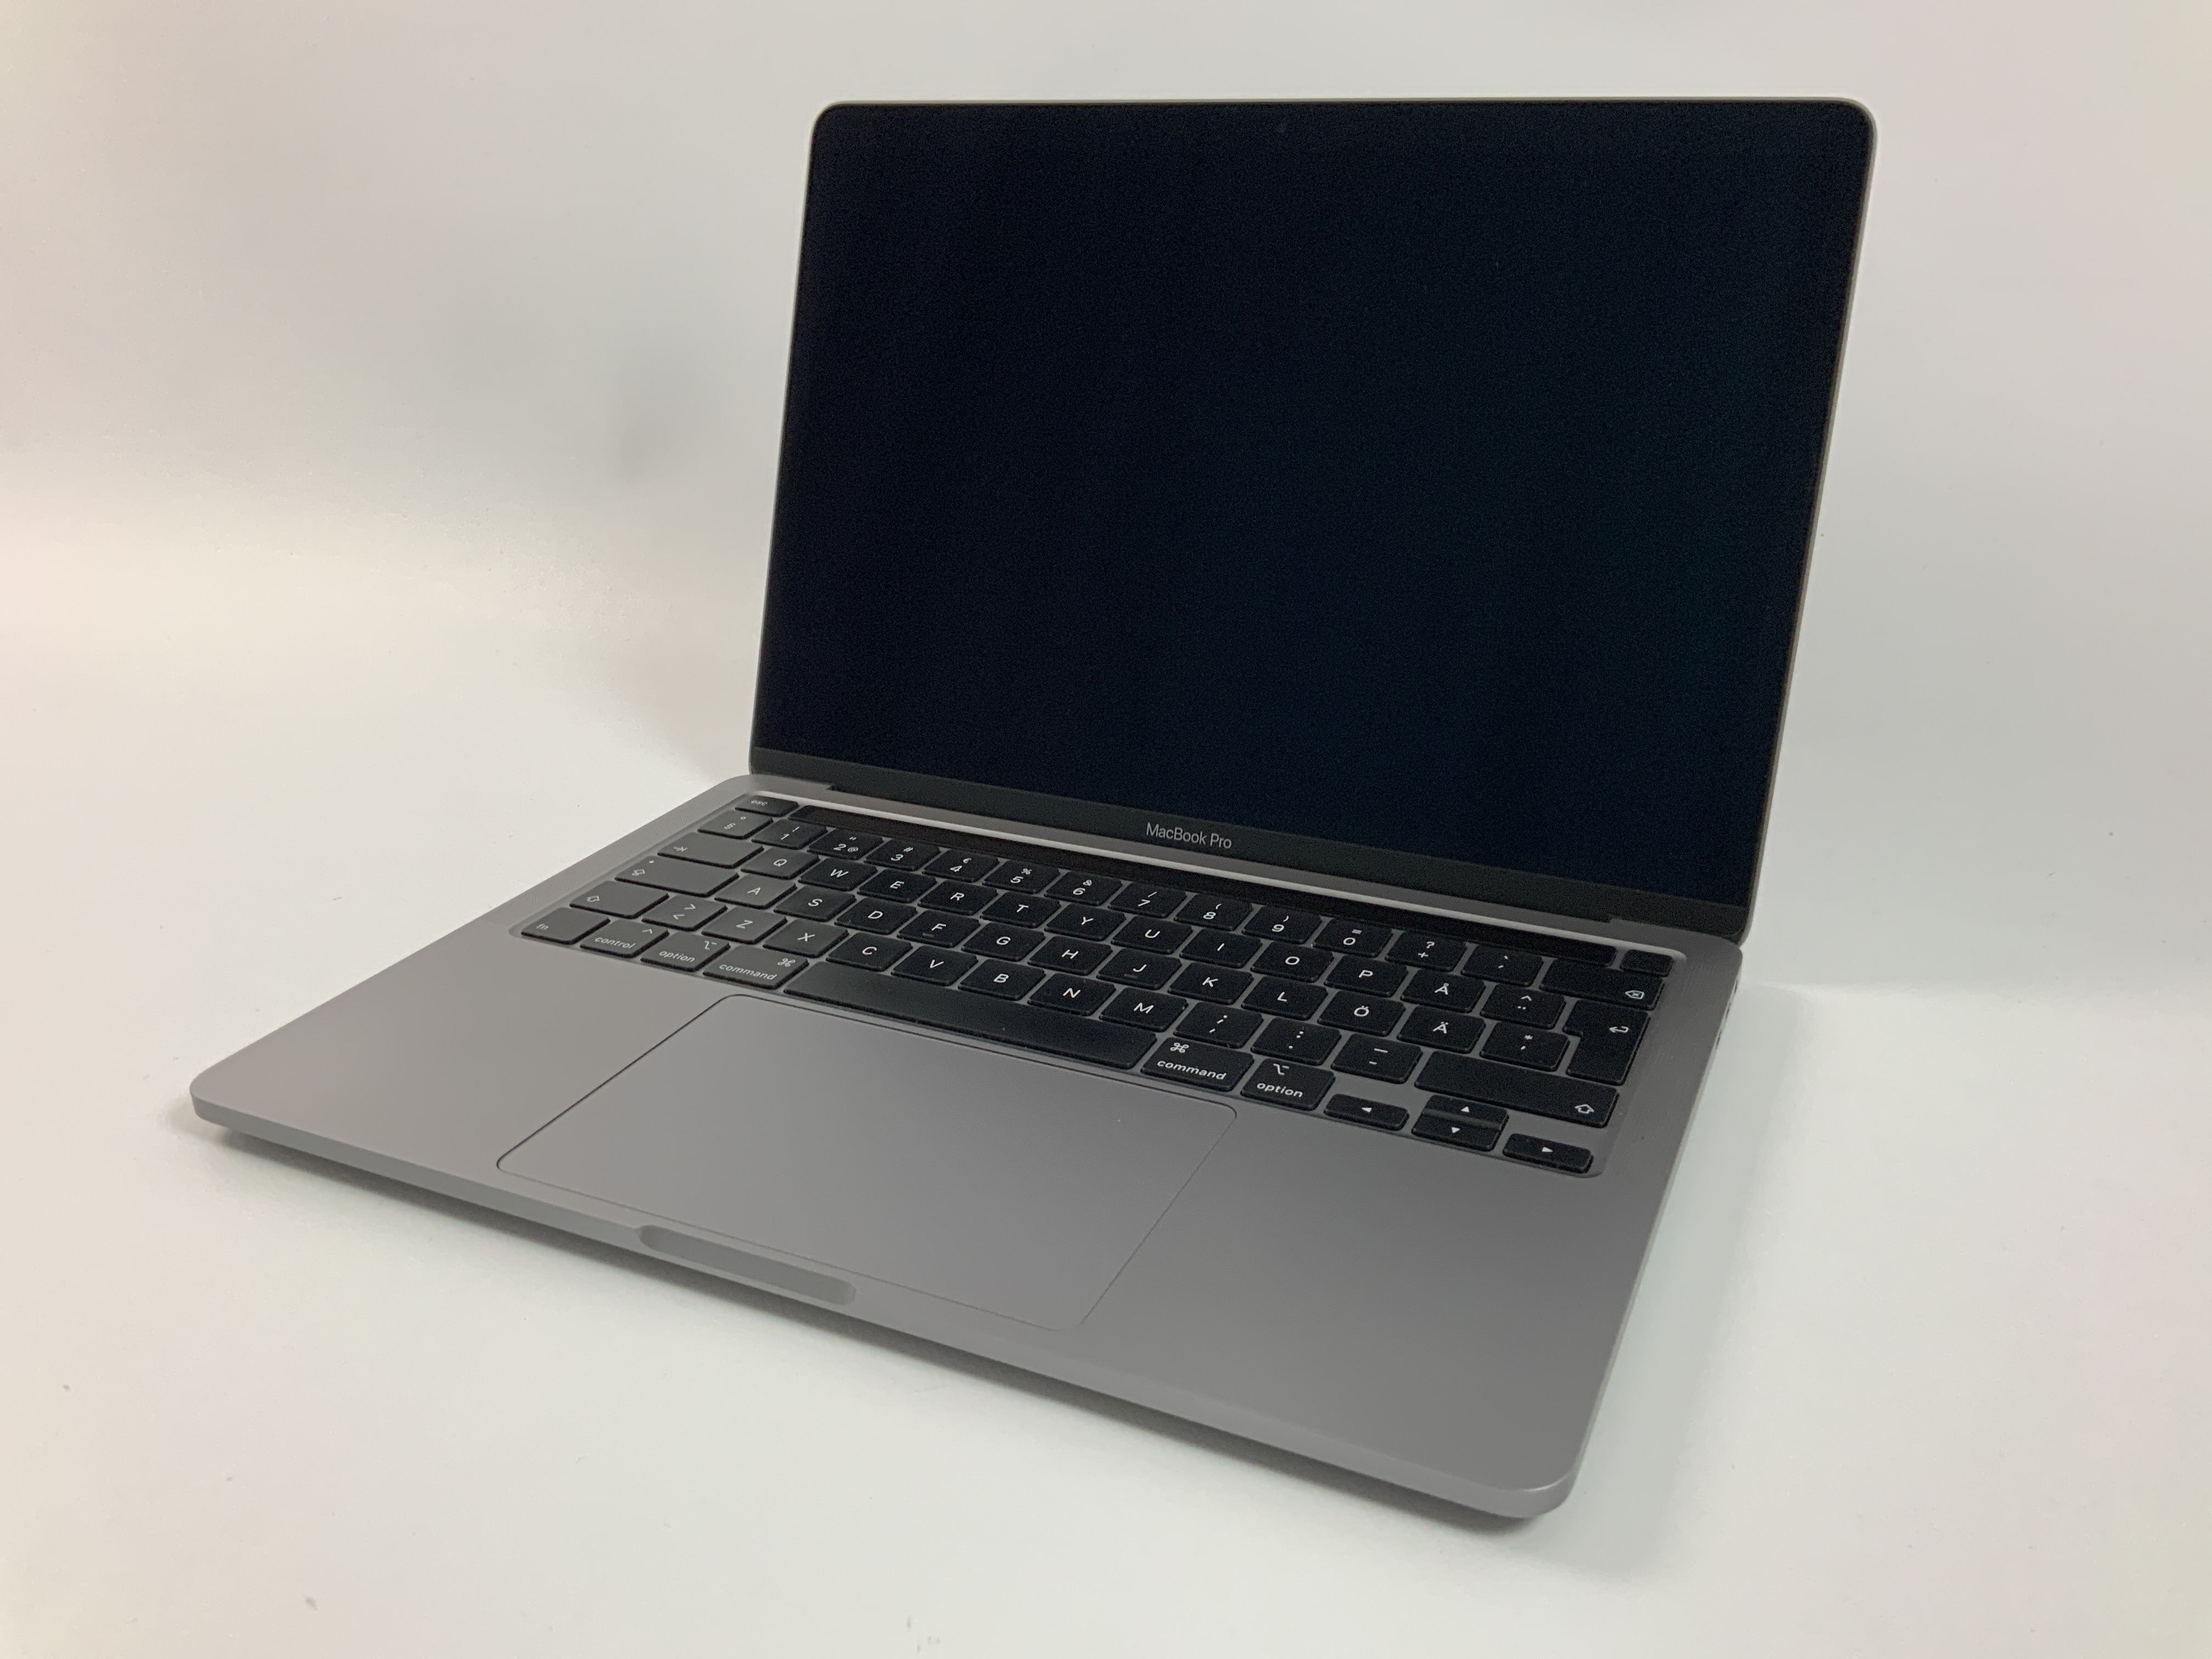 MacBook Pro 13" 4TBT Mid 2020 (Intel Quad-Core i5 2.0 GHz 16 GB RAM 512 GB SSD), Space Gray, Intel Quad-Core i5 2.0 GHz, 16 GB RAM, 512 GB SSD, imagen 1